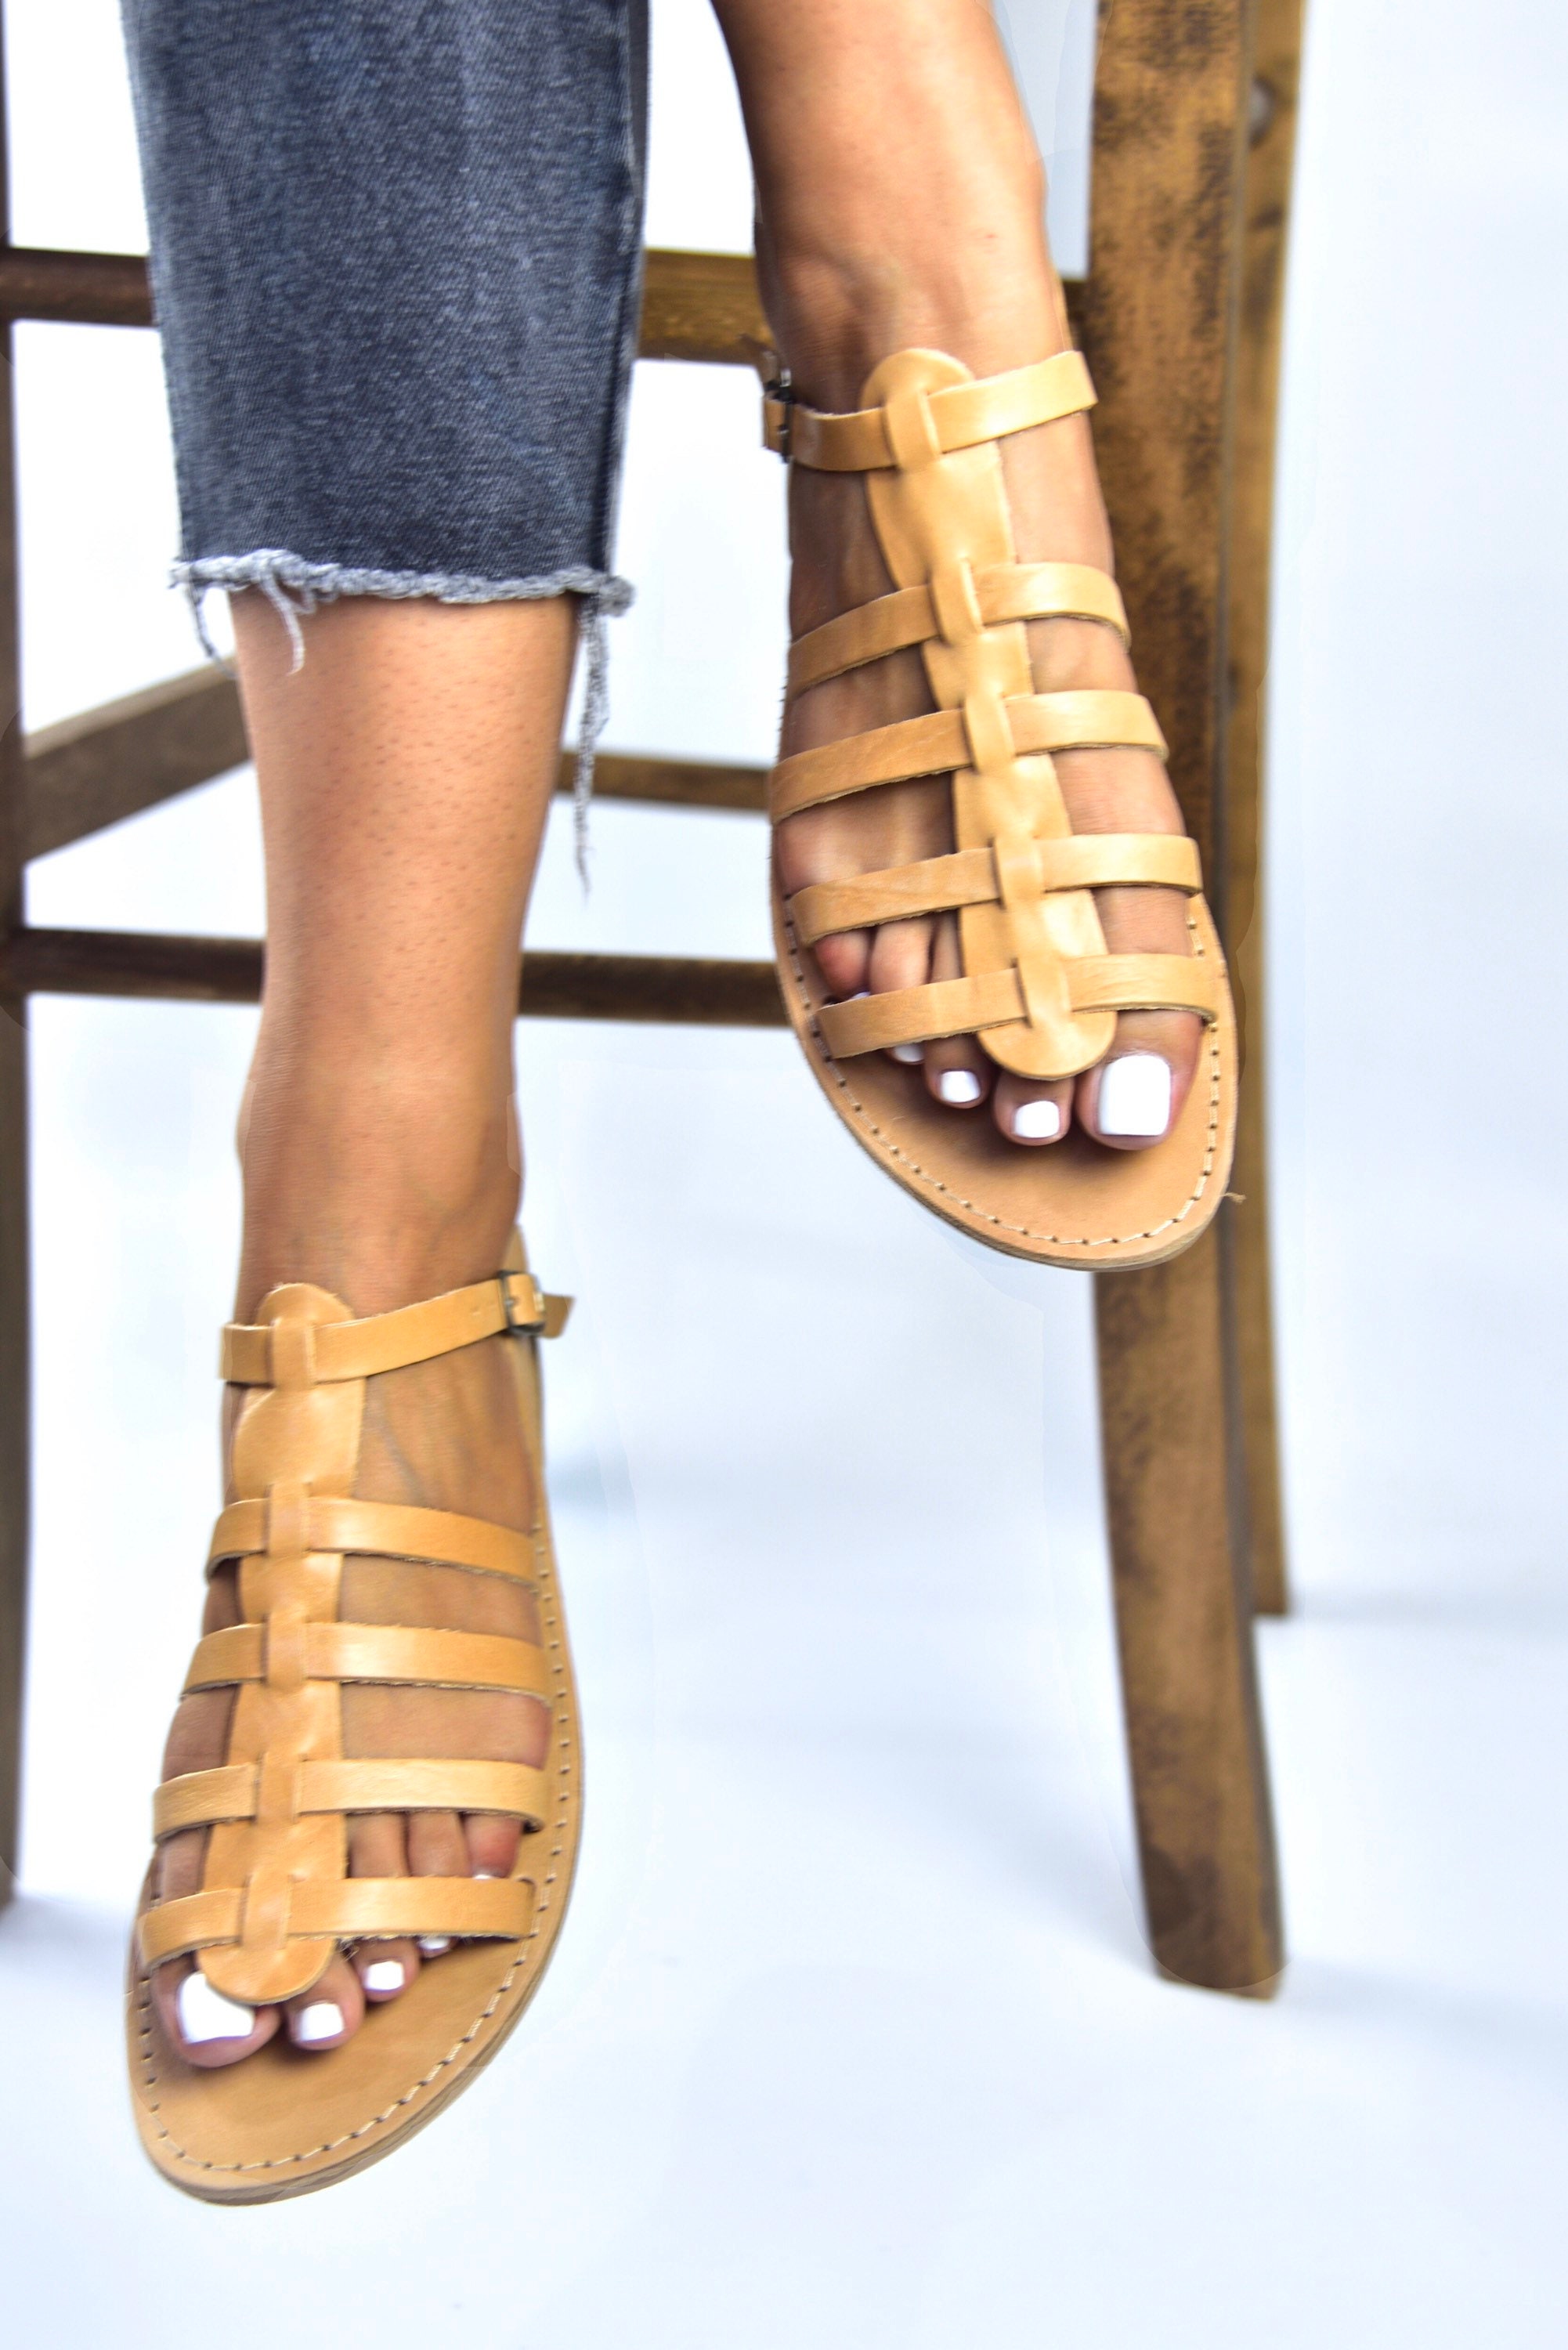 Leather Sandals Greek Sandals Women Sandals Gladiator | Etsy